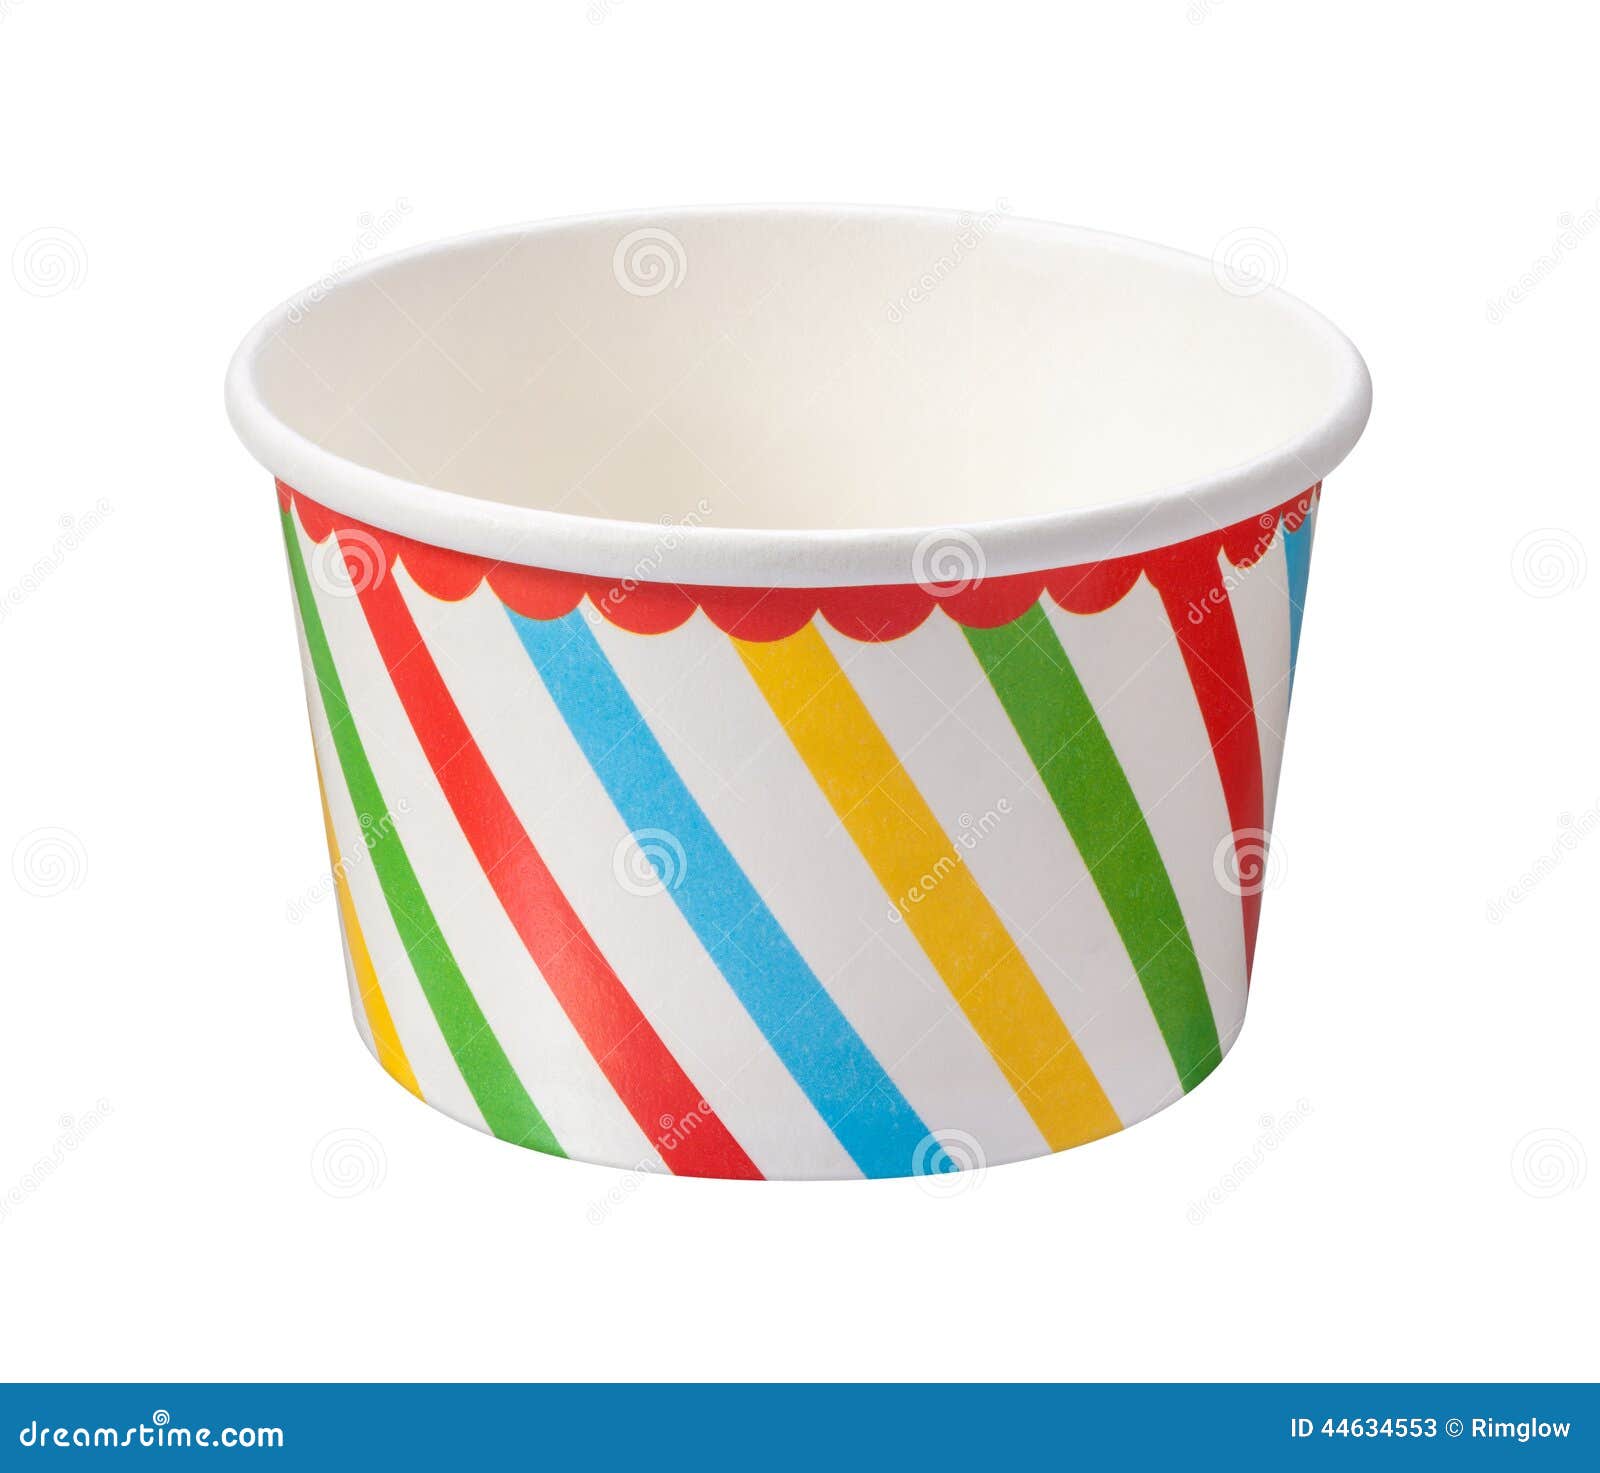 clipart ice cream cup - photo #19